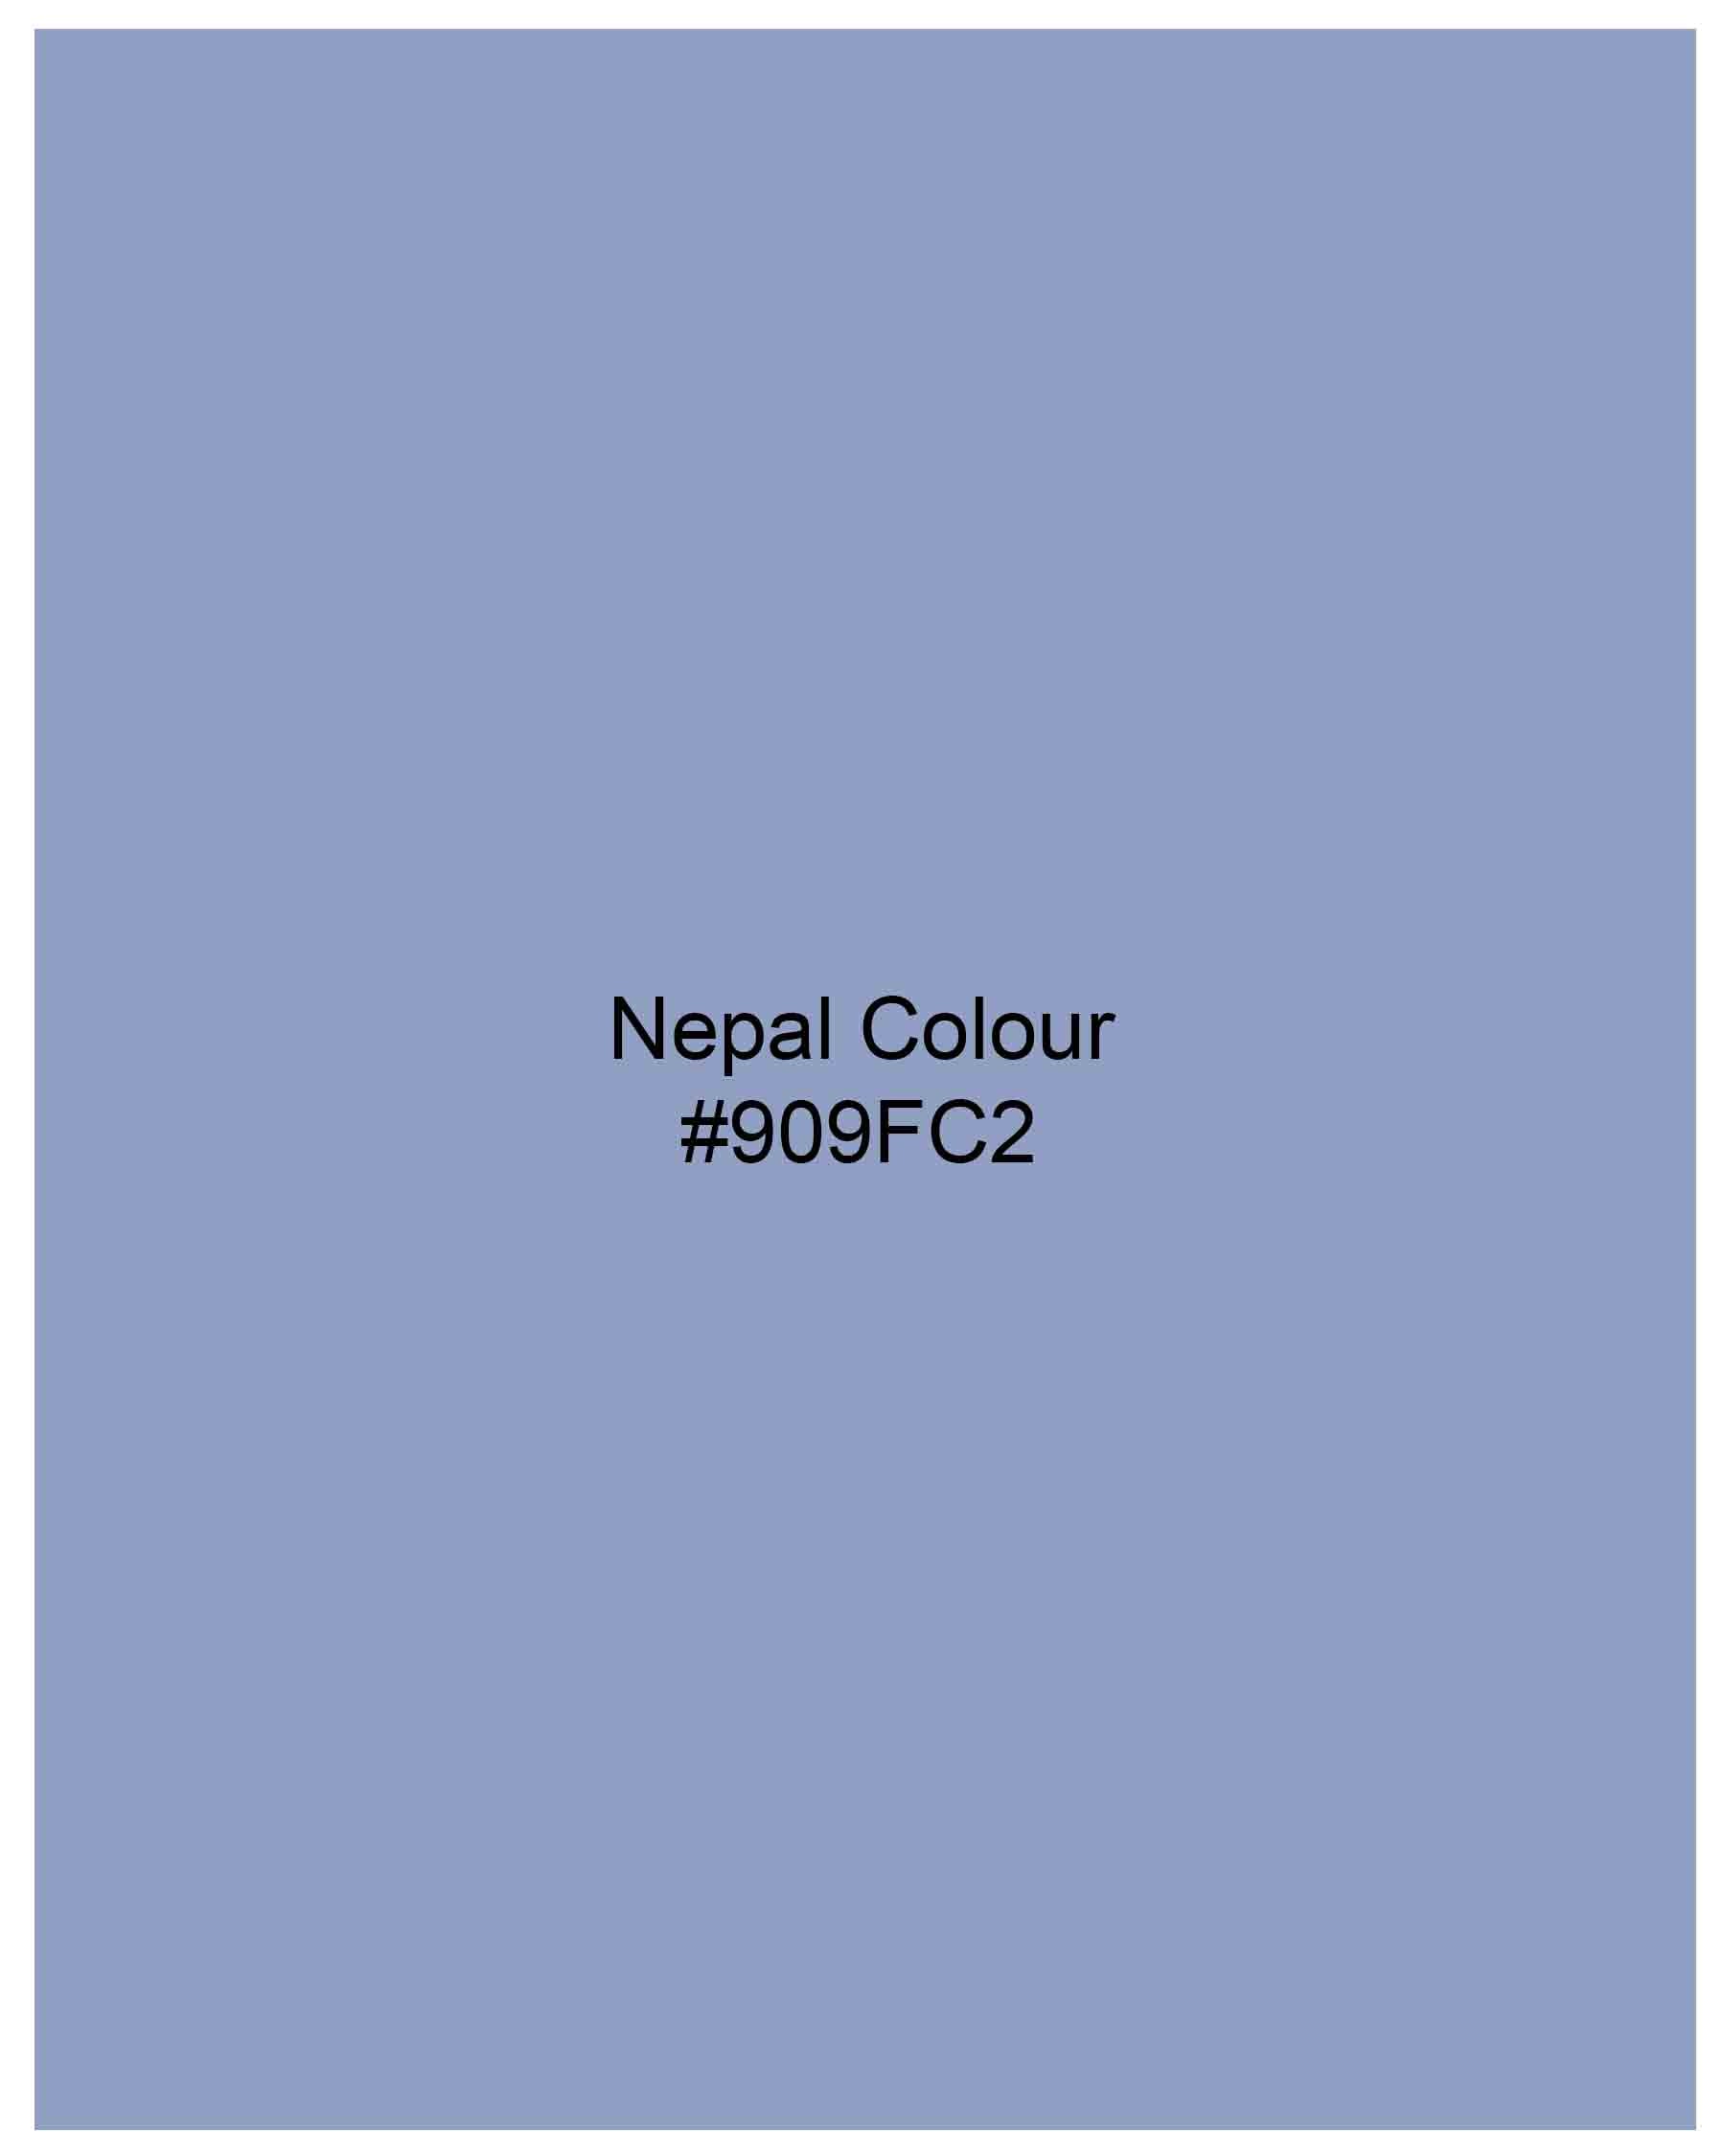 Nepal Blue Two Tone Chambray Premium Cotton Shirt 7995-38,7995-H-38,7995-39,7995-H-39,7995-40,7995-H-40,7995-42,7995-H-42,7995-44,7995-H-44,7995-46,7995-H-46,7995-48,7995-H-48,7995-50,7995-H-50,7995-52,7995-H-52